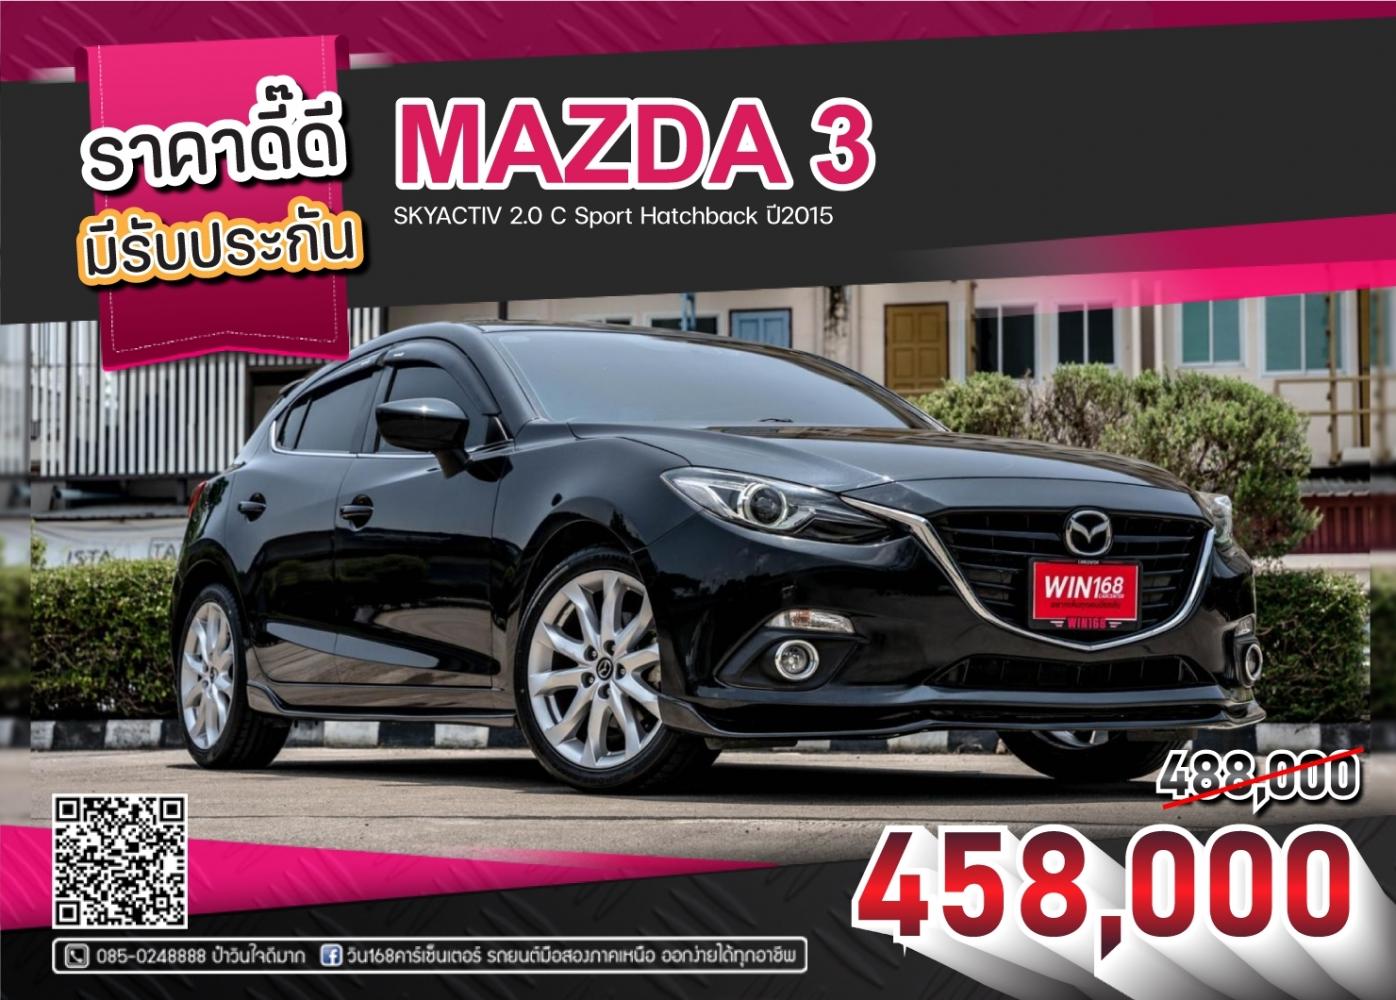 MAZDA 3 SKYACTIV 2.0 C Sport Hatchback ปี2015 (M112)